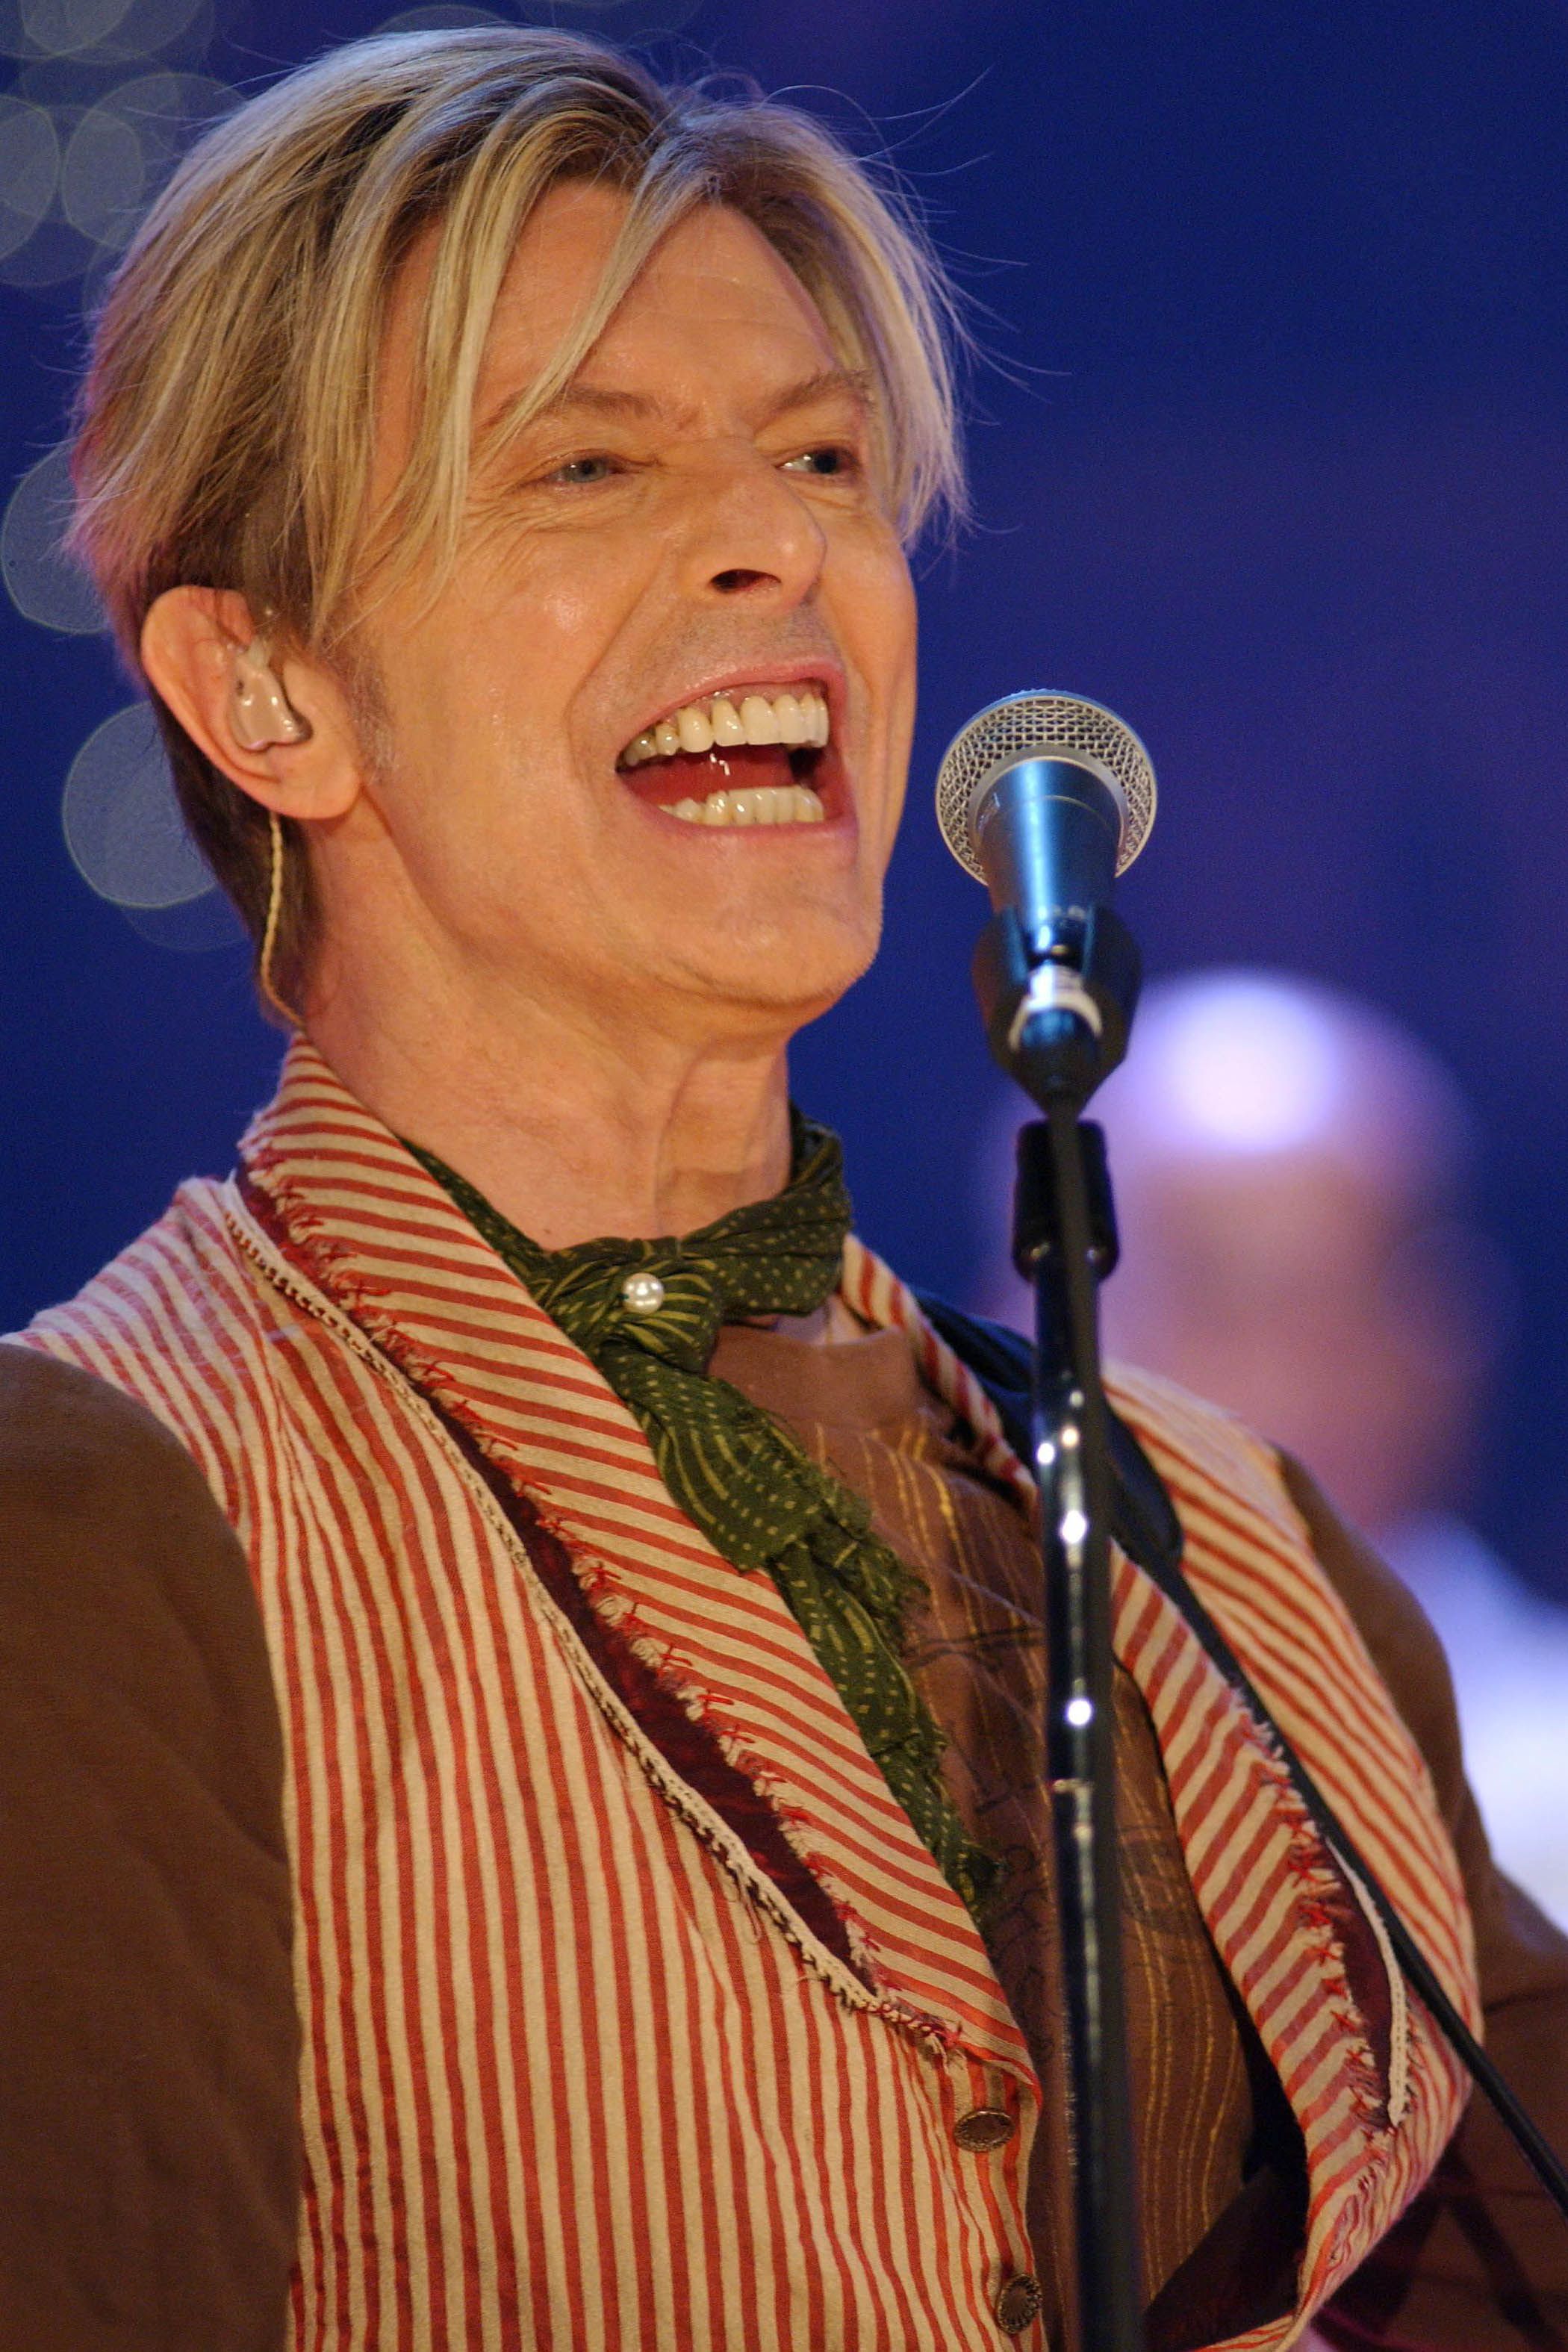 David Bowie singing.jpeg